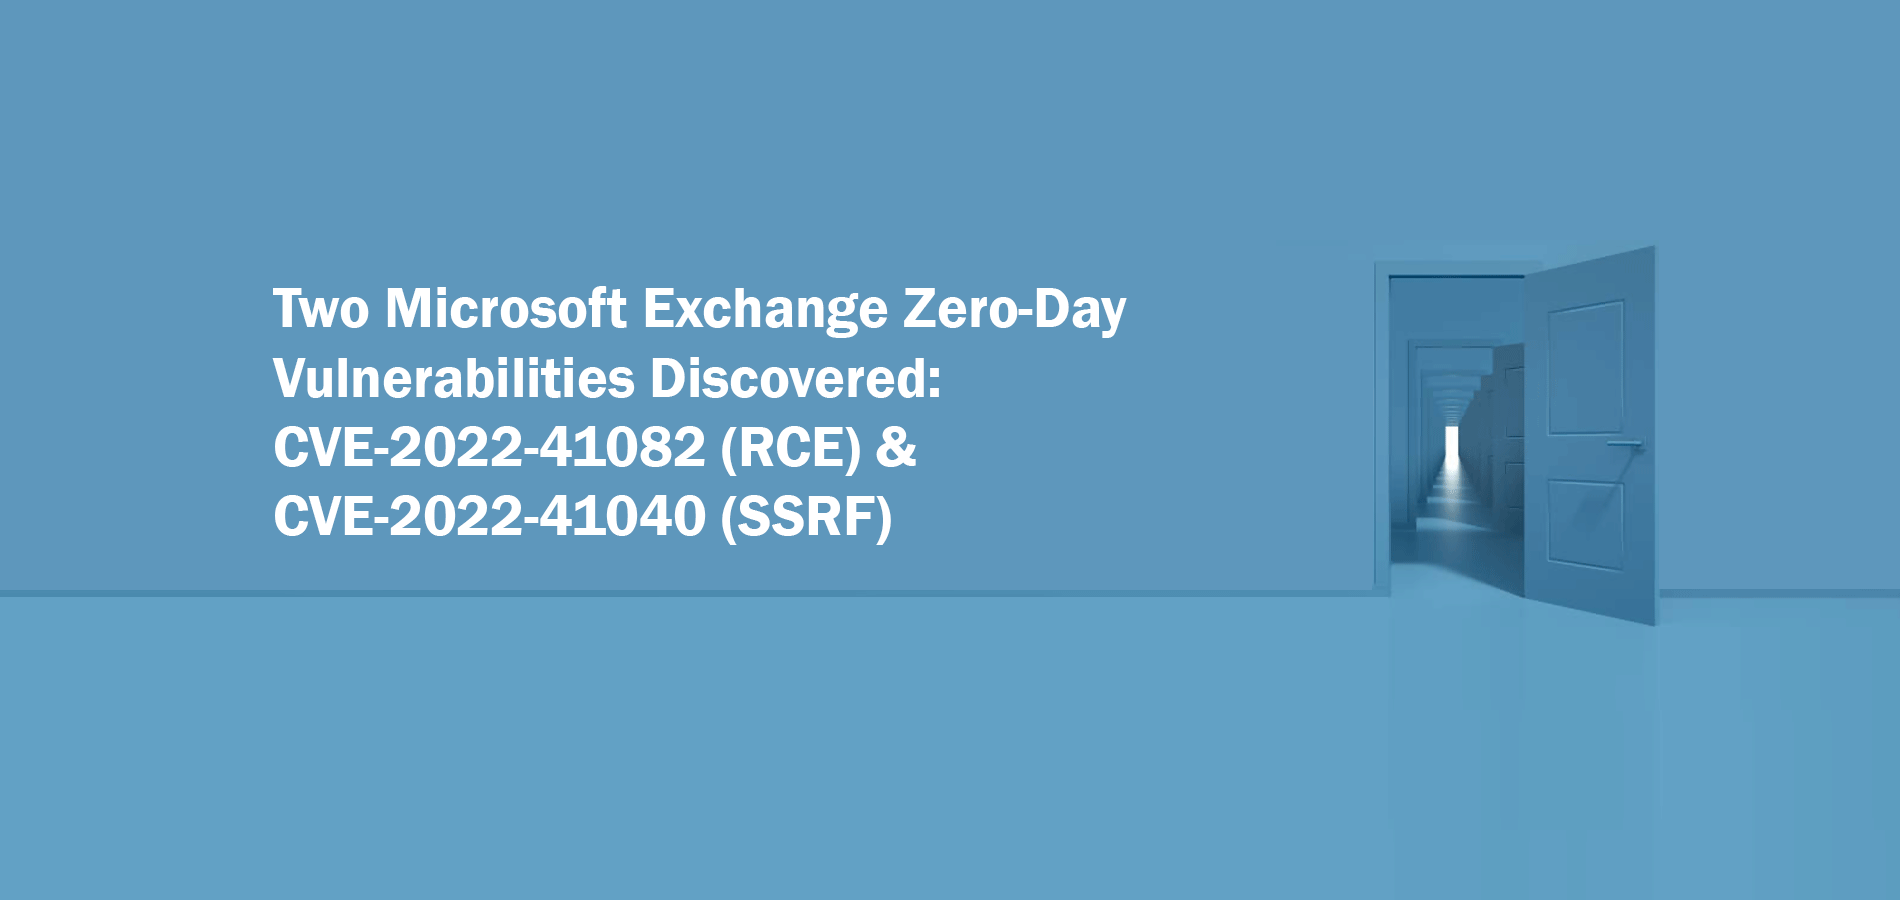 Two Microsoft Exchange Zero-Day Vulnerabilities Discovered: CVE-2022-41082 (RCE) & CVE-2022-41040 (SSRF).